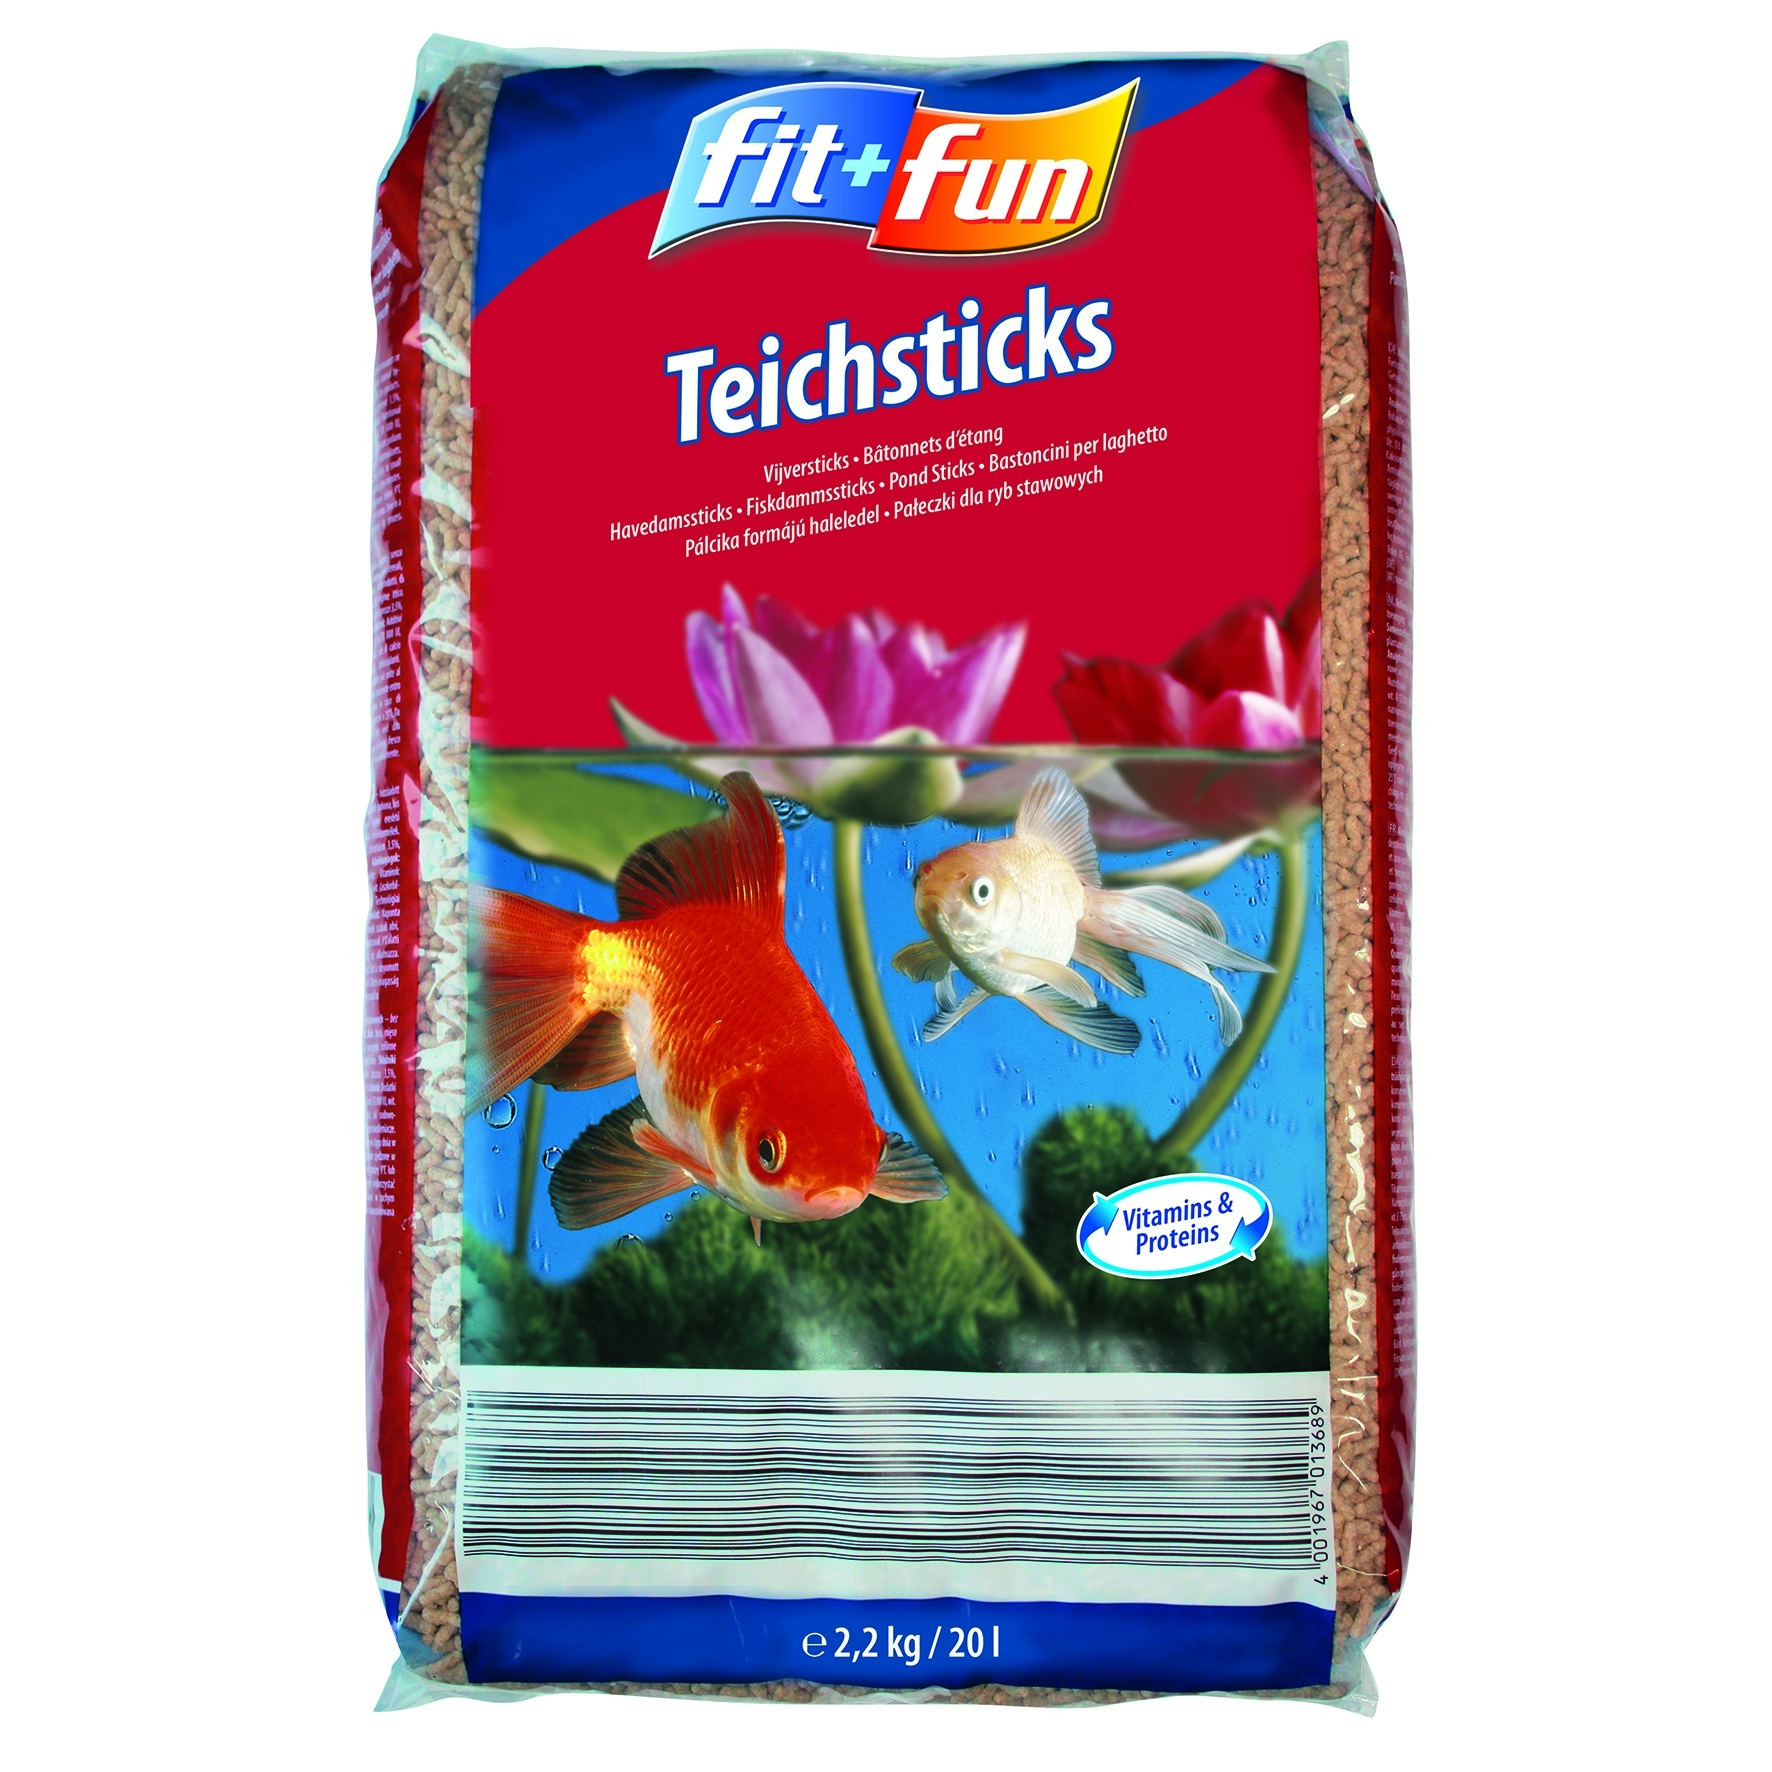 FIT+FUN Teichsticks 20 Liter